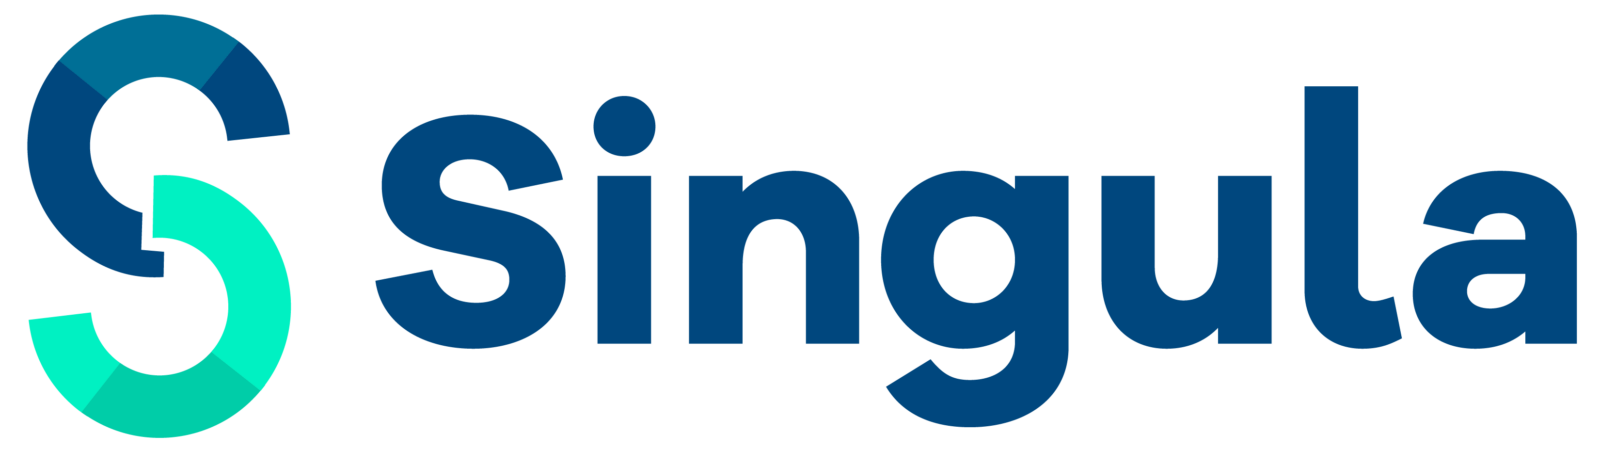 Singula-Logo-ALL-01-1600x450.png